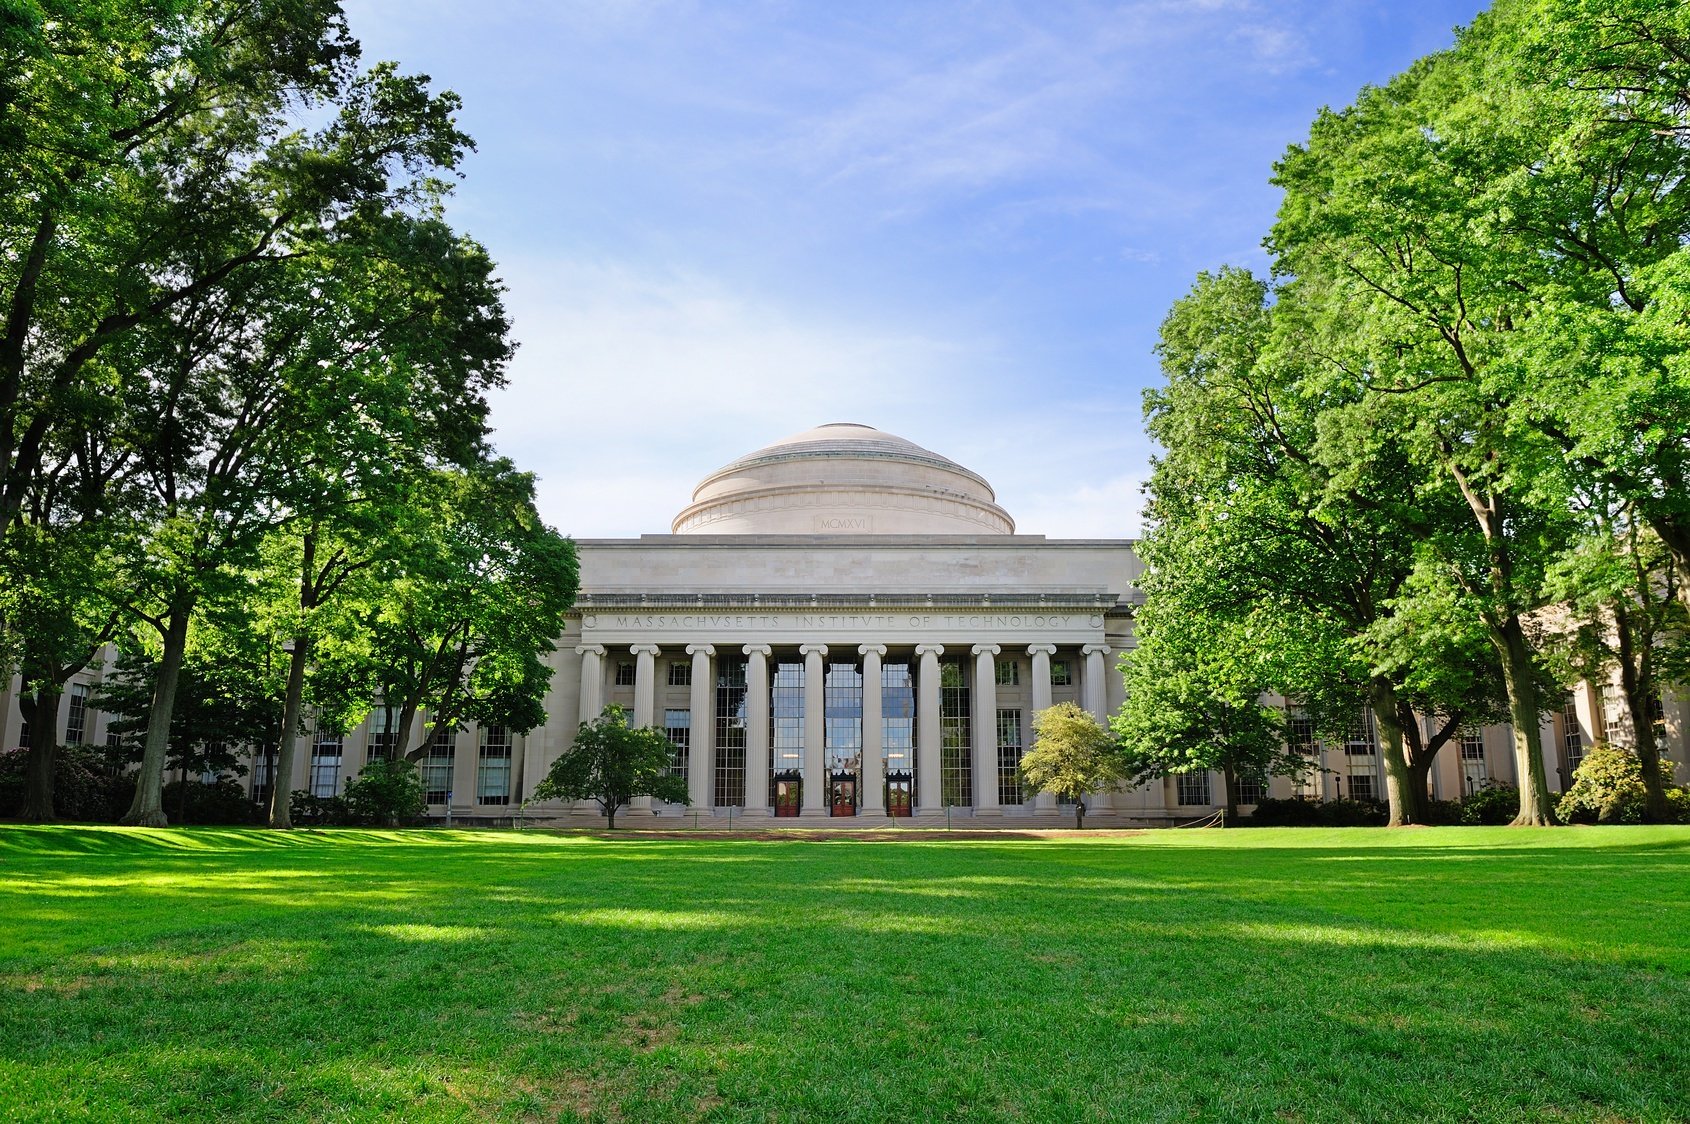 Graduate Admissions » MIT Physics